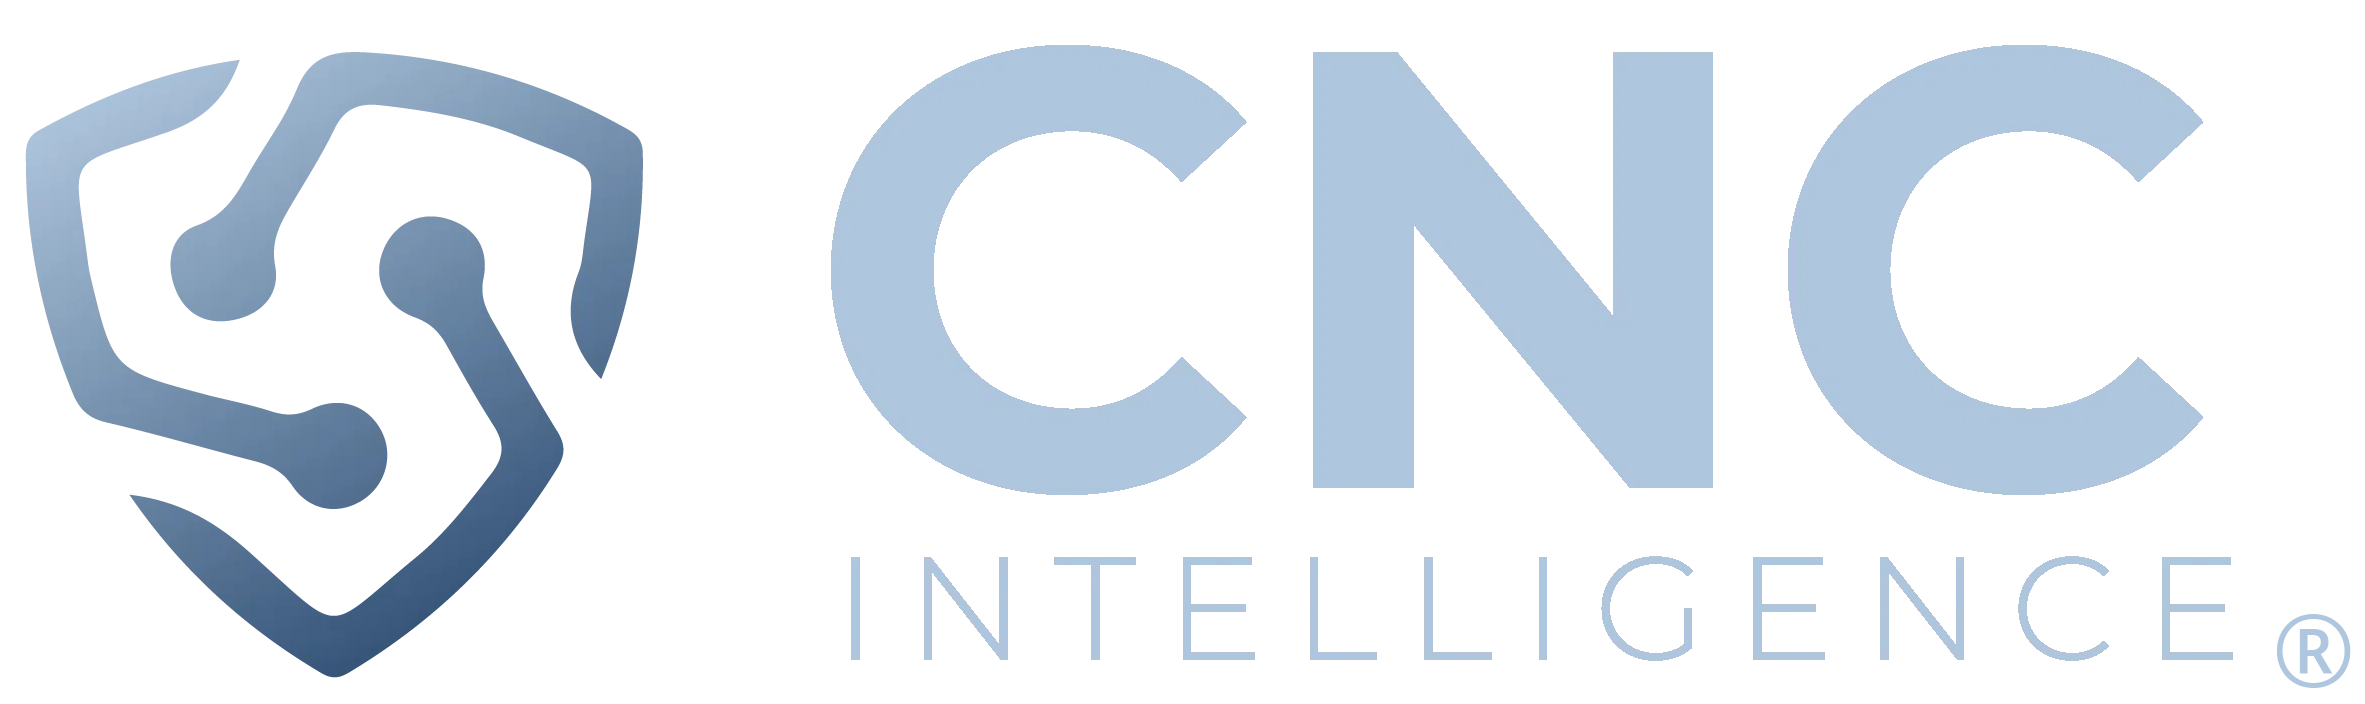 CNC Intelligence logo (registered)